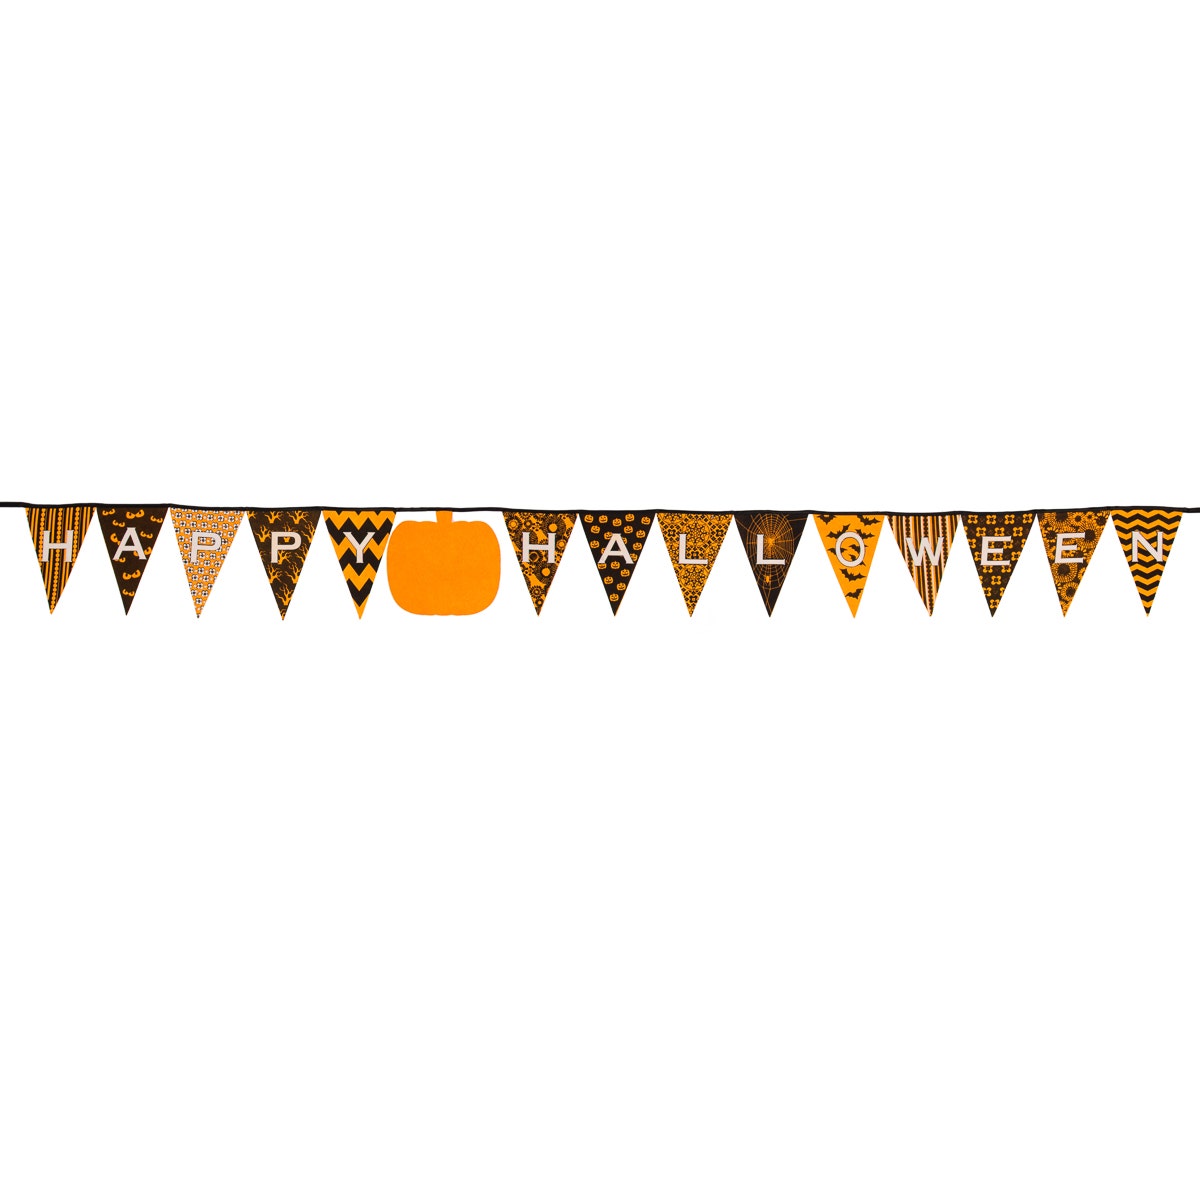 10ft Happy Halloween Pennant Banner – DIY Jack-O-Lantern